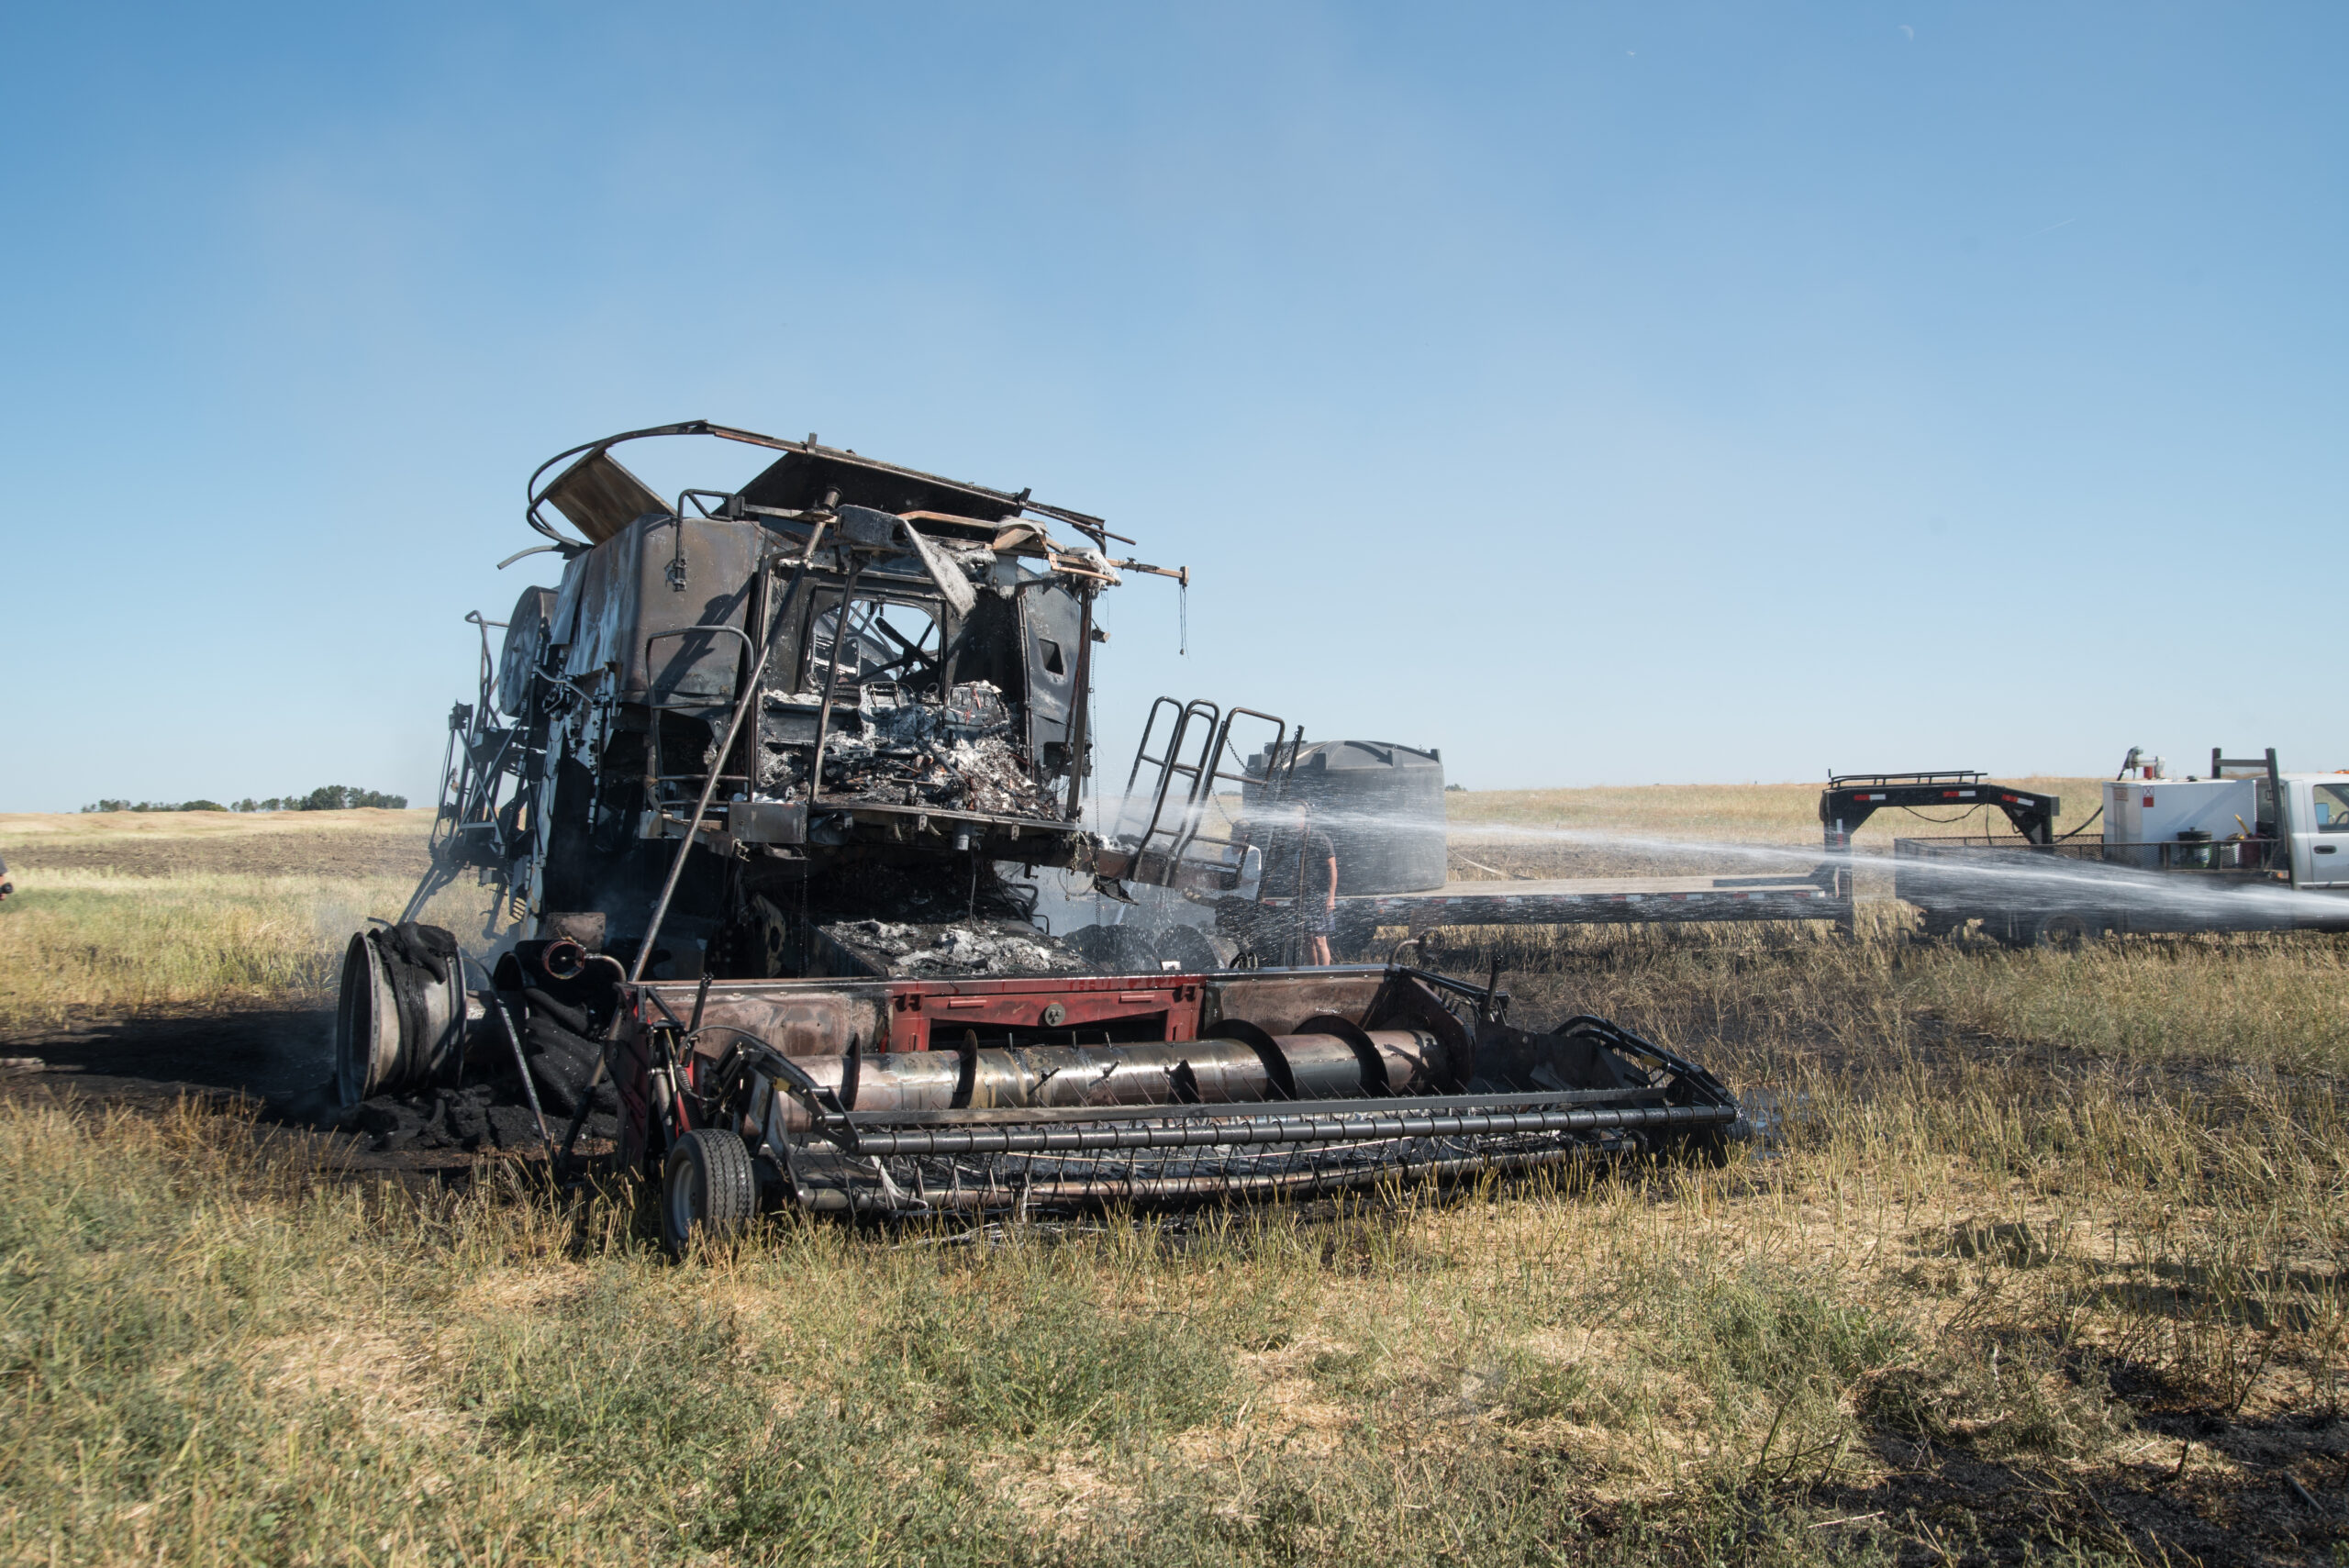 Combine harvester fire warning as temperatures soar